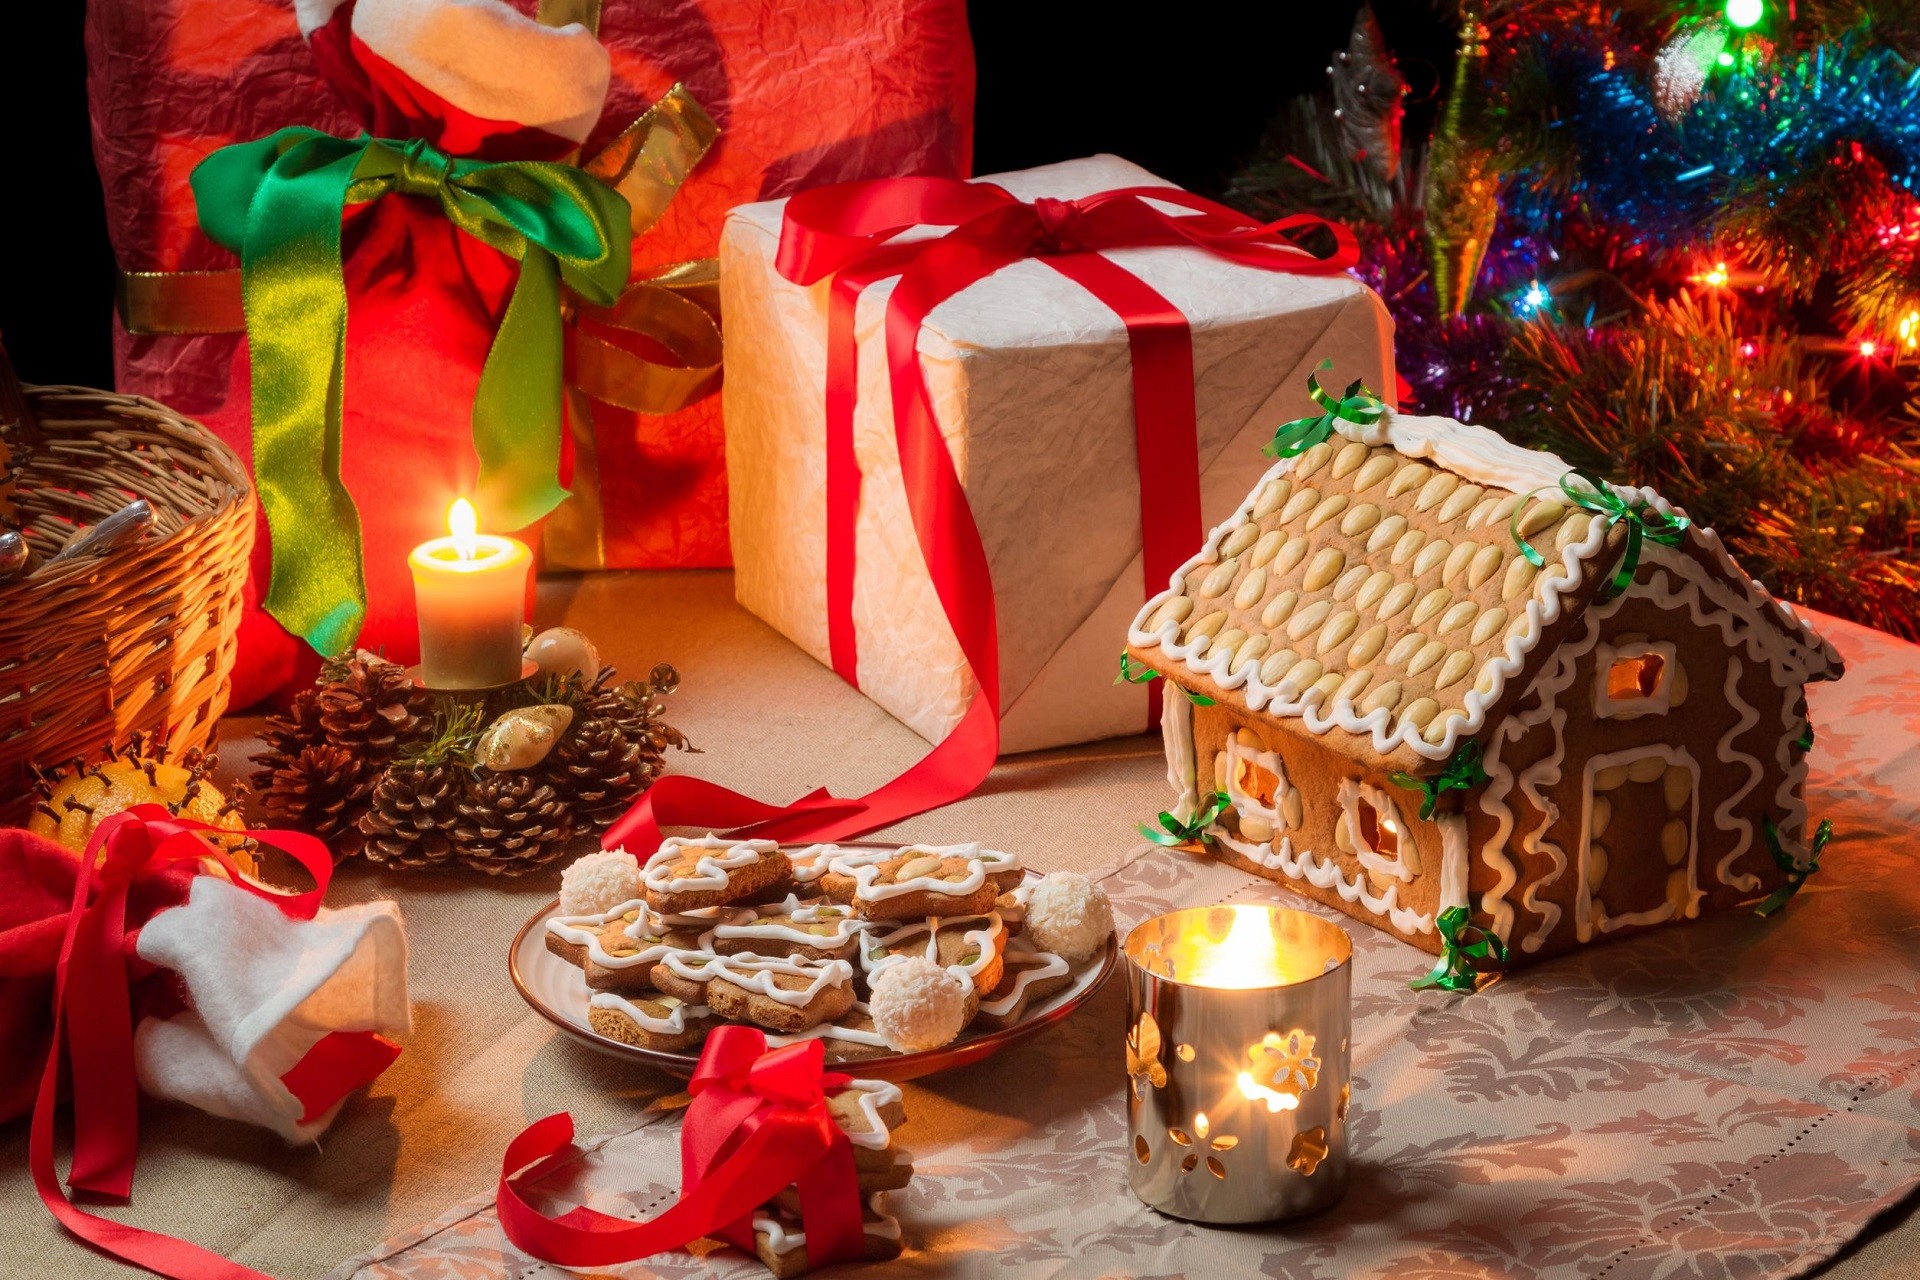 7 Festive Ways to Spread Christmas Cheer